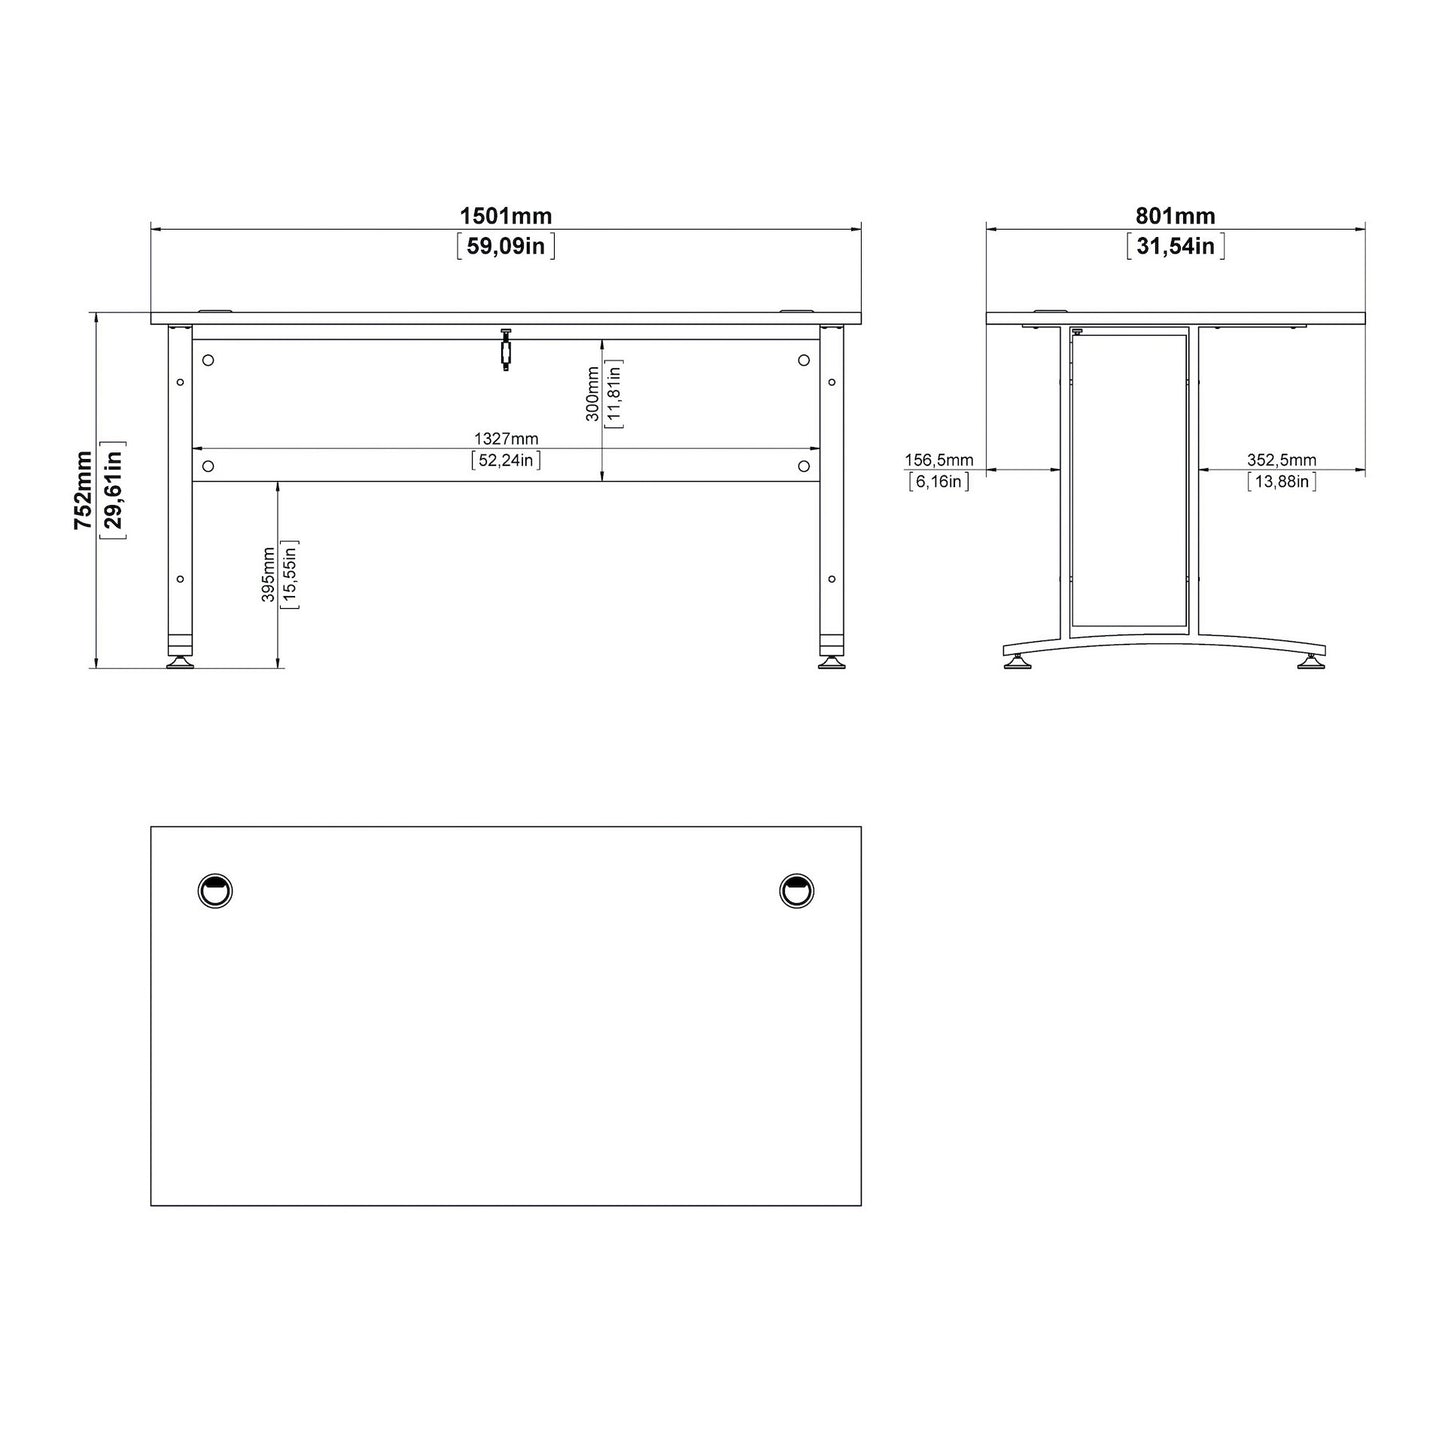 Furniture To Go Prima Desk 150cm in Oak with Silver Grey Steel Legs